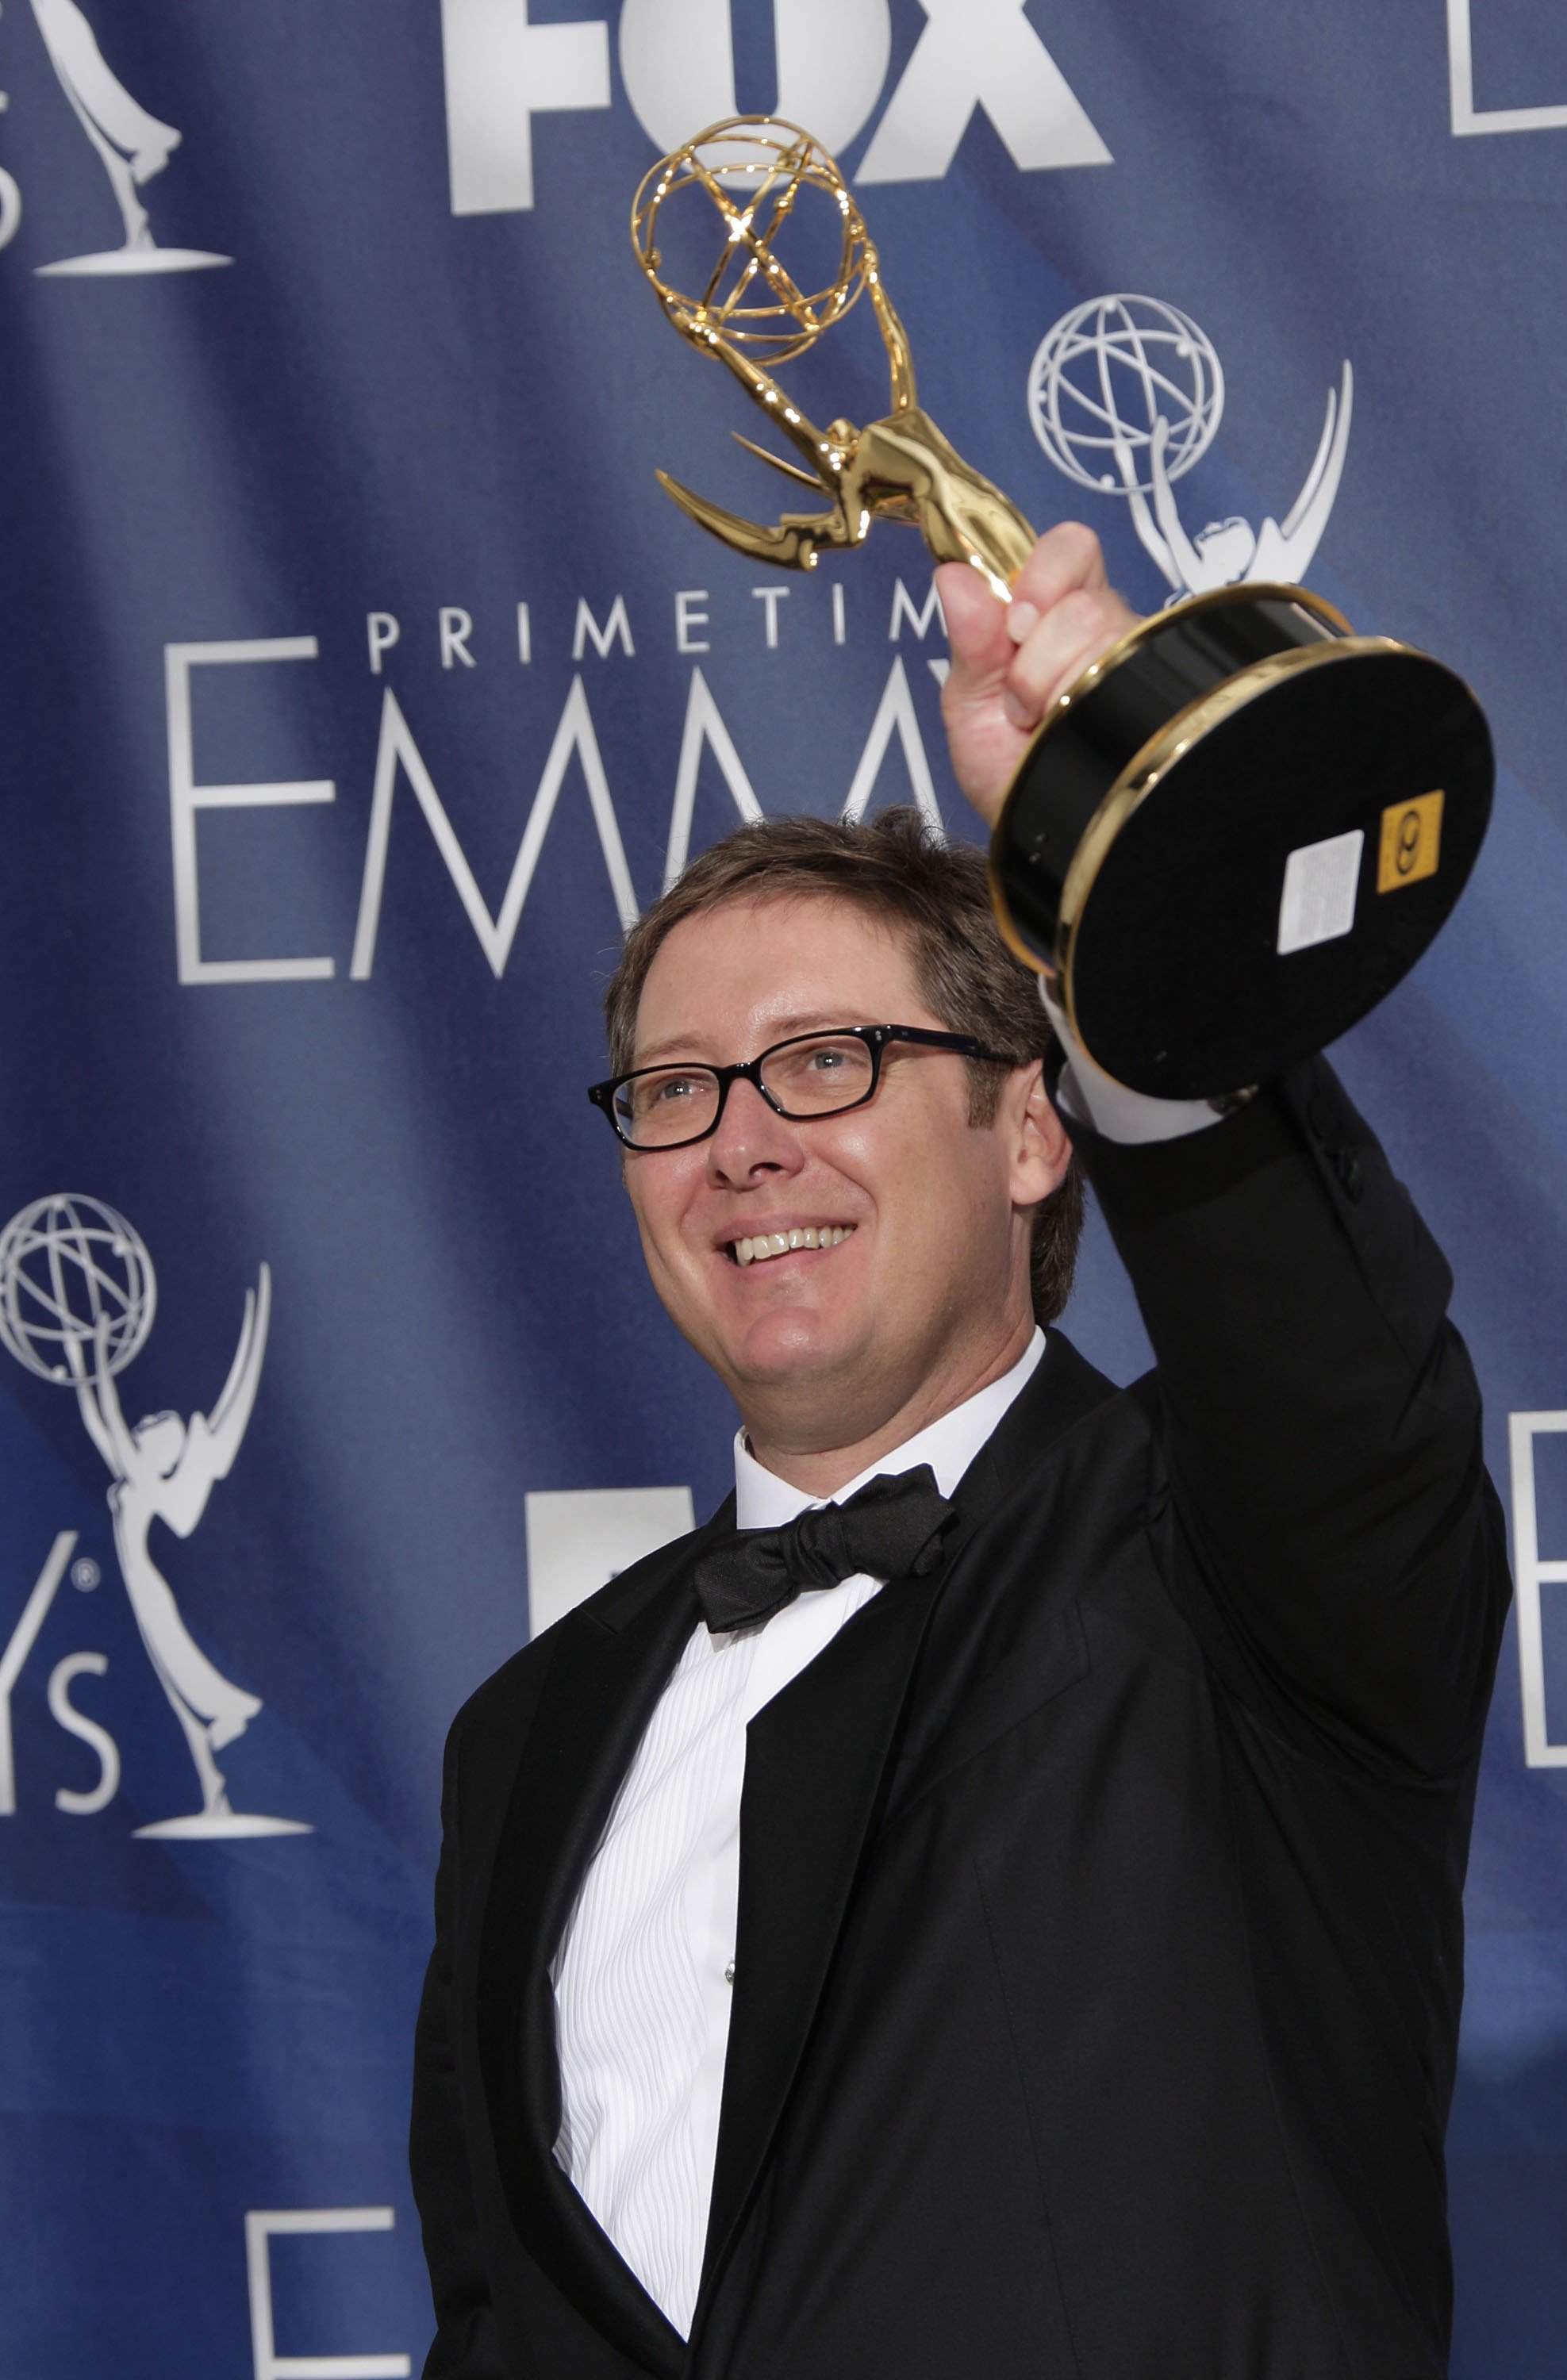 James Spader, star of The Blacklist, hoists an Emmy award